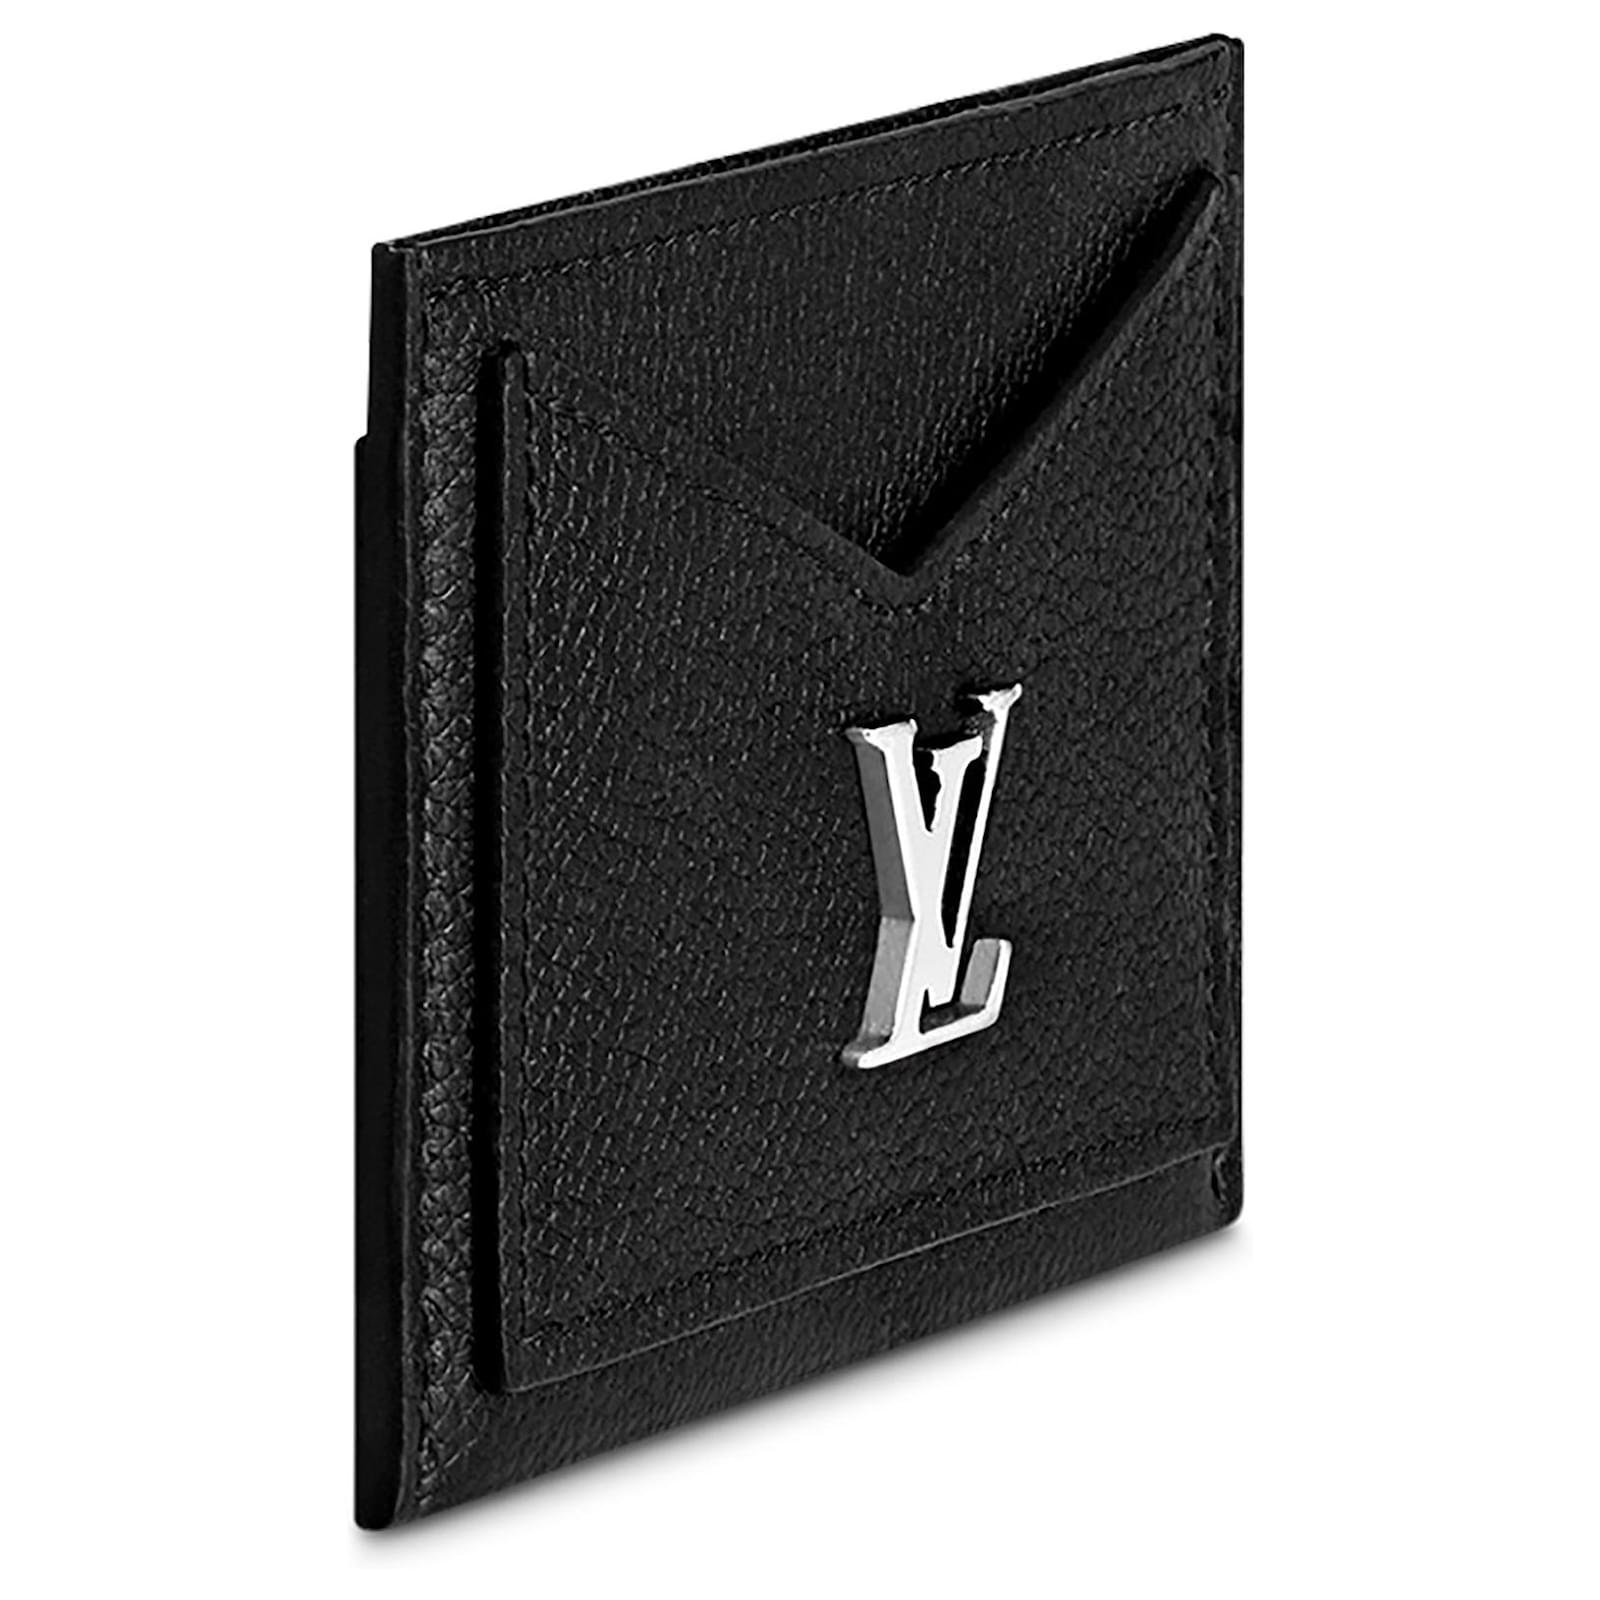 Lockme leather wallet